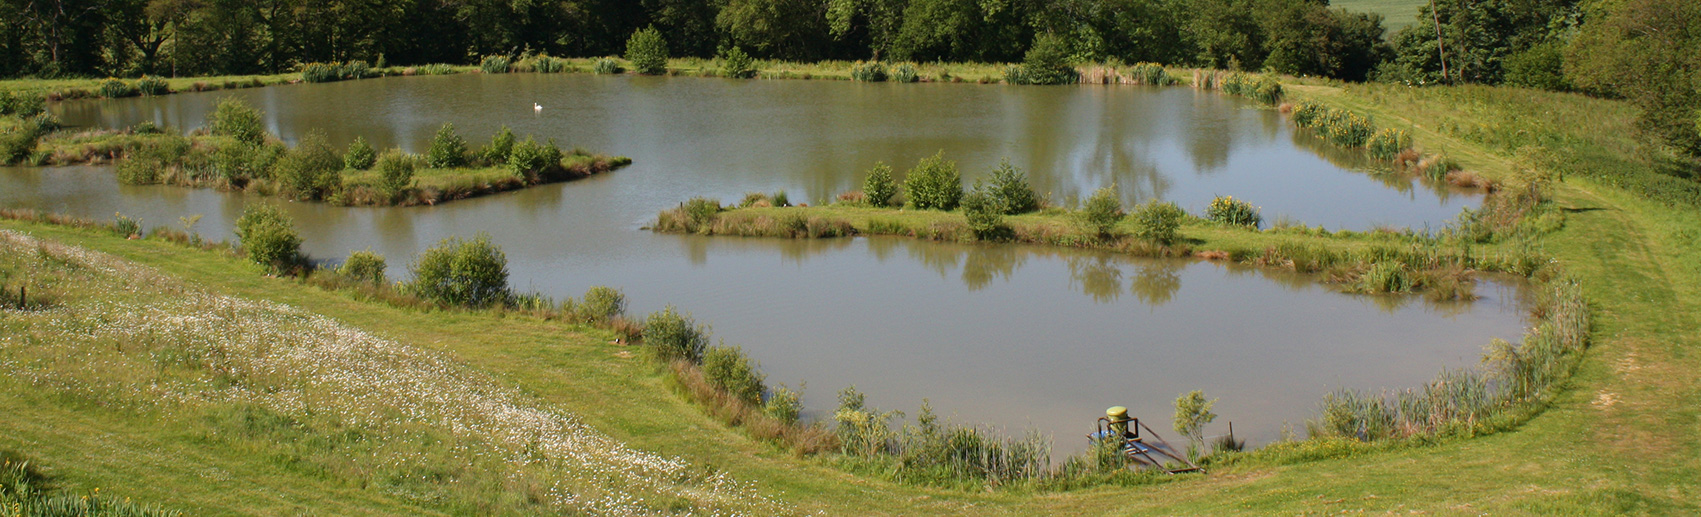 jennys fishing lake - newdigate farms estate